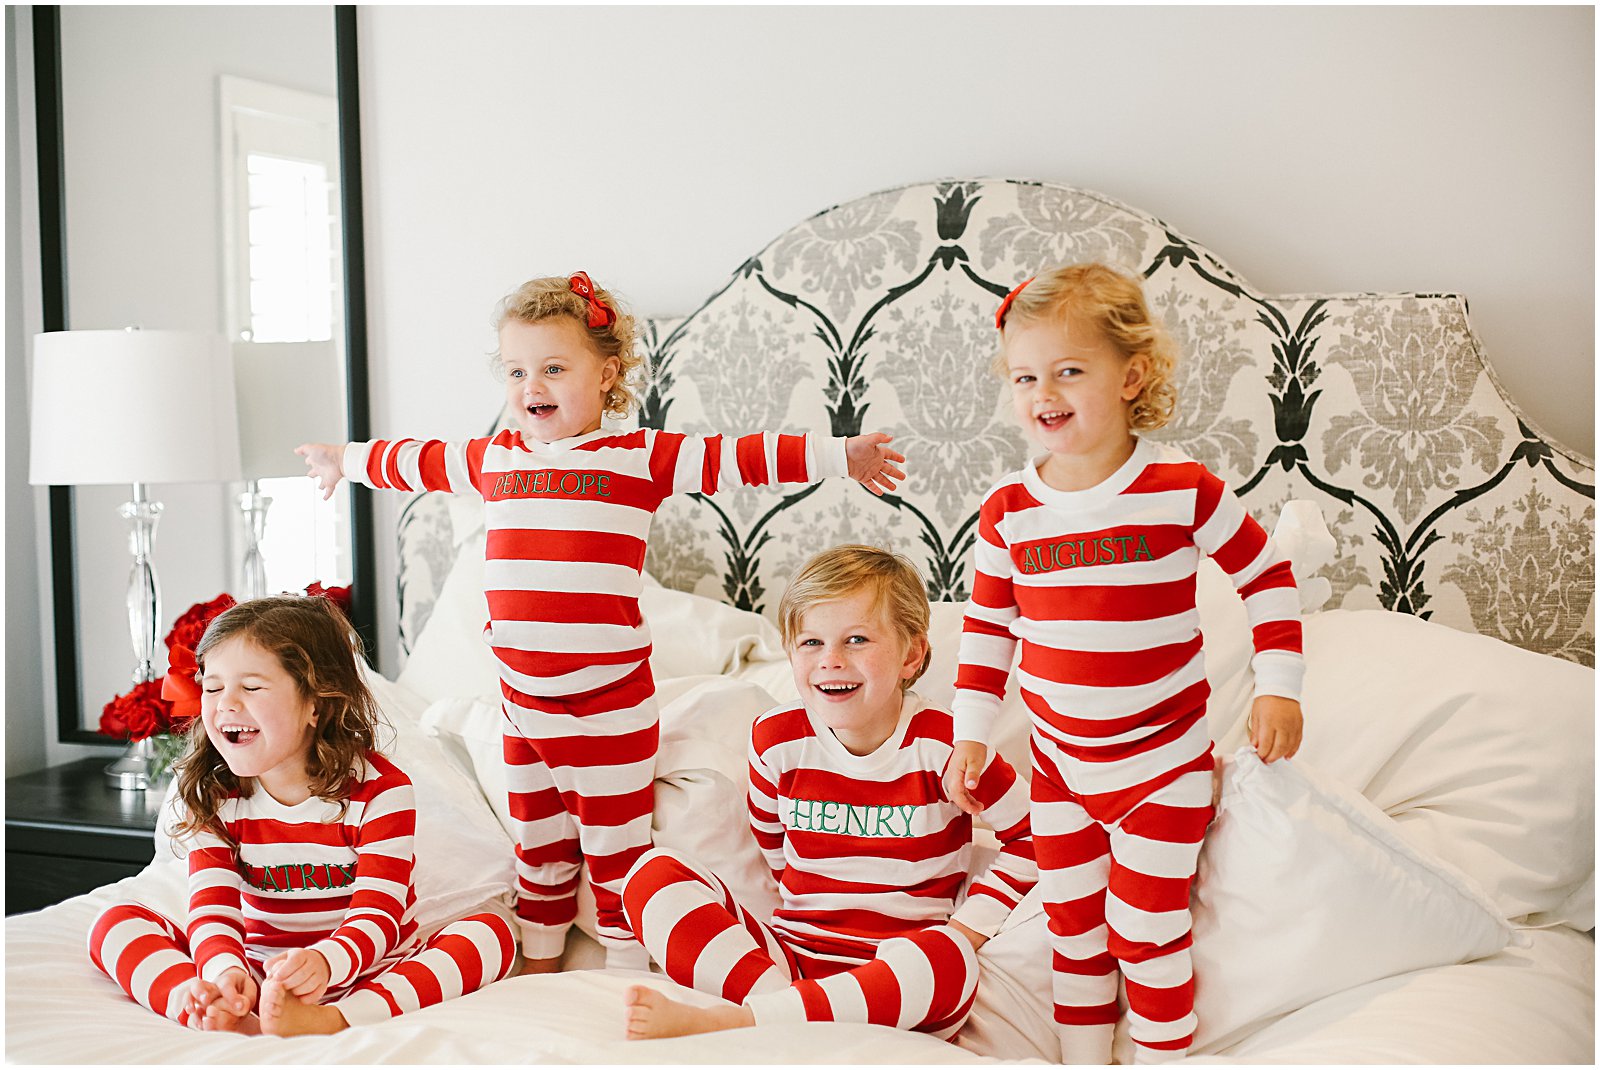 children dresses in matching christmas pajamas